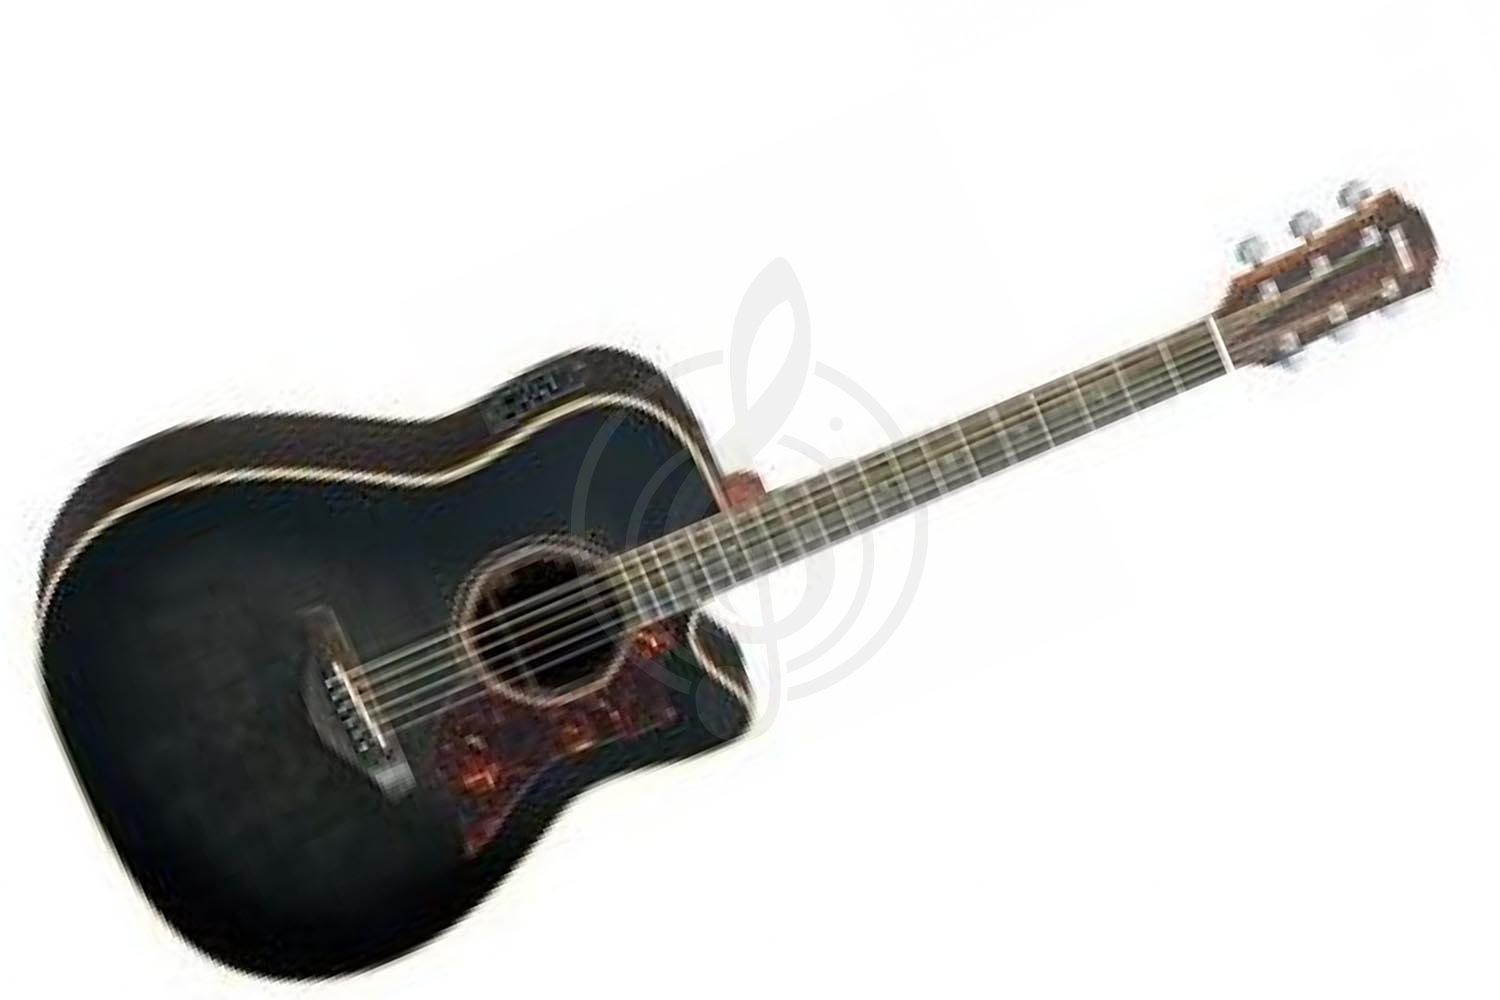 Электроакустическая гитара Электроакустические гитары Yamaha Yamaha A3R TBL ARE - электроакустическая гитара A3R TOBACCO BROWN SUNBURST//ARE - фото 1